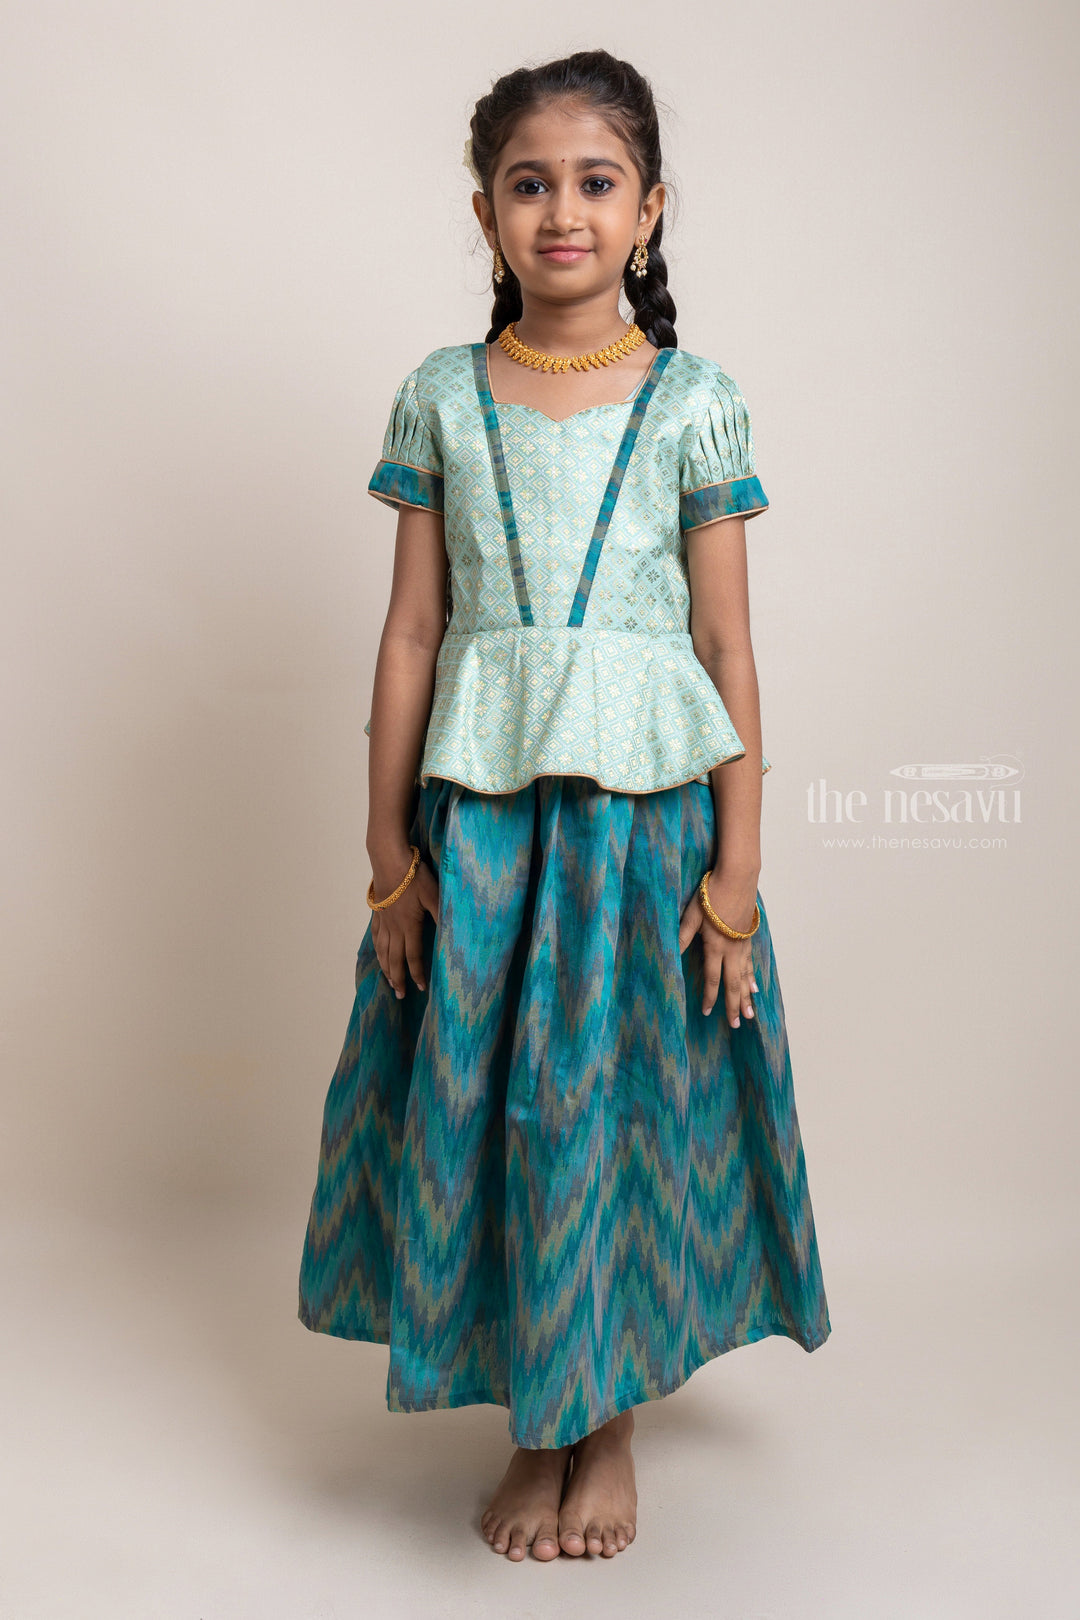 The Nesavu Pattu Pavadai Gorgeous Green Floral Designed Silk Blouse With Ziz-Zag Printed Pattu Pavadai For Girls Nesavu 16 (1Y) / Green / Jute Silk GPP253C-16 Traditional Wear For Girls | Latest Pattu Pavadai | The Nesavu